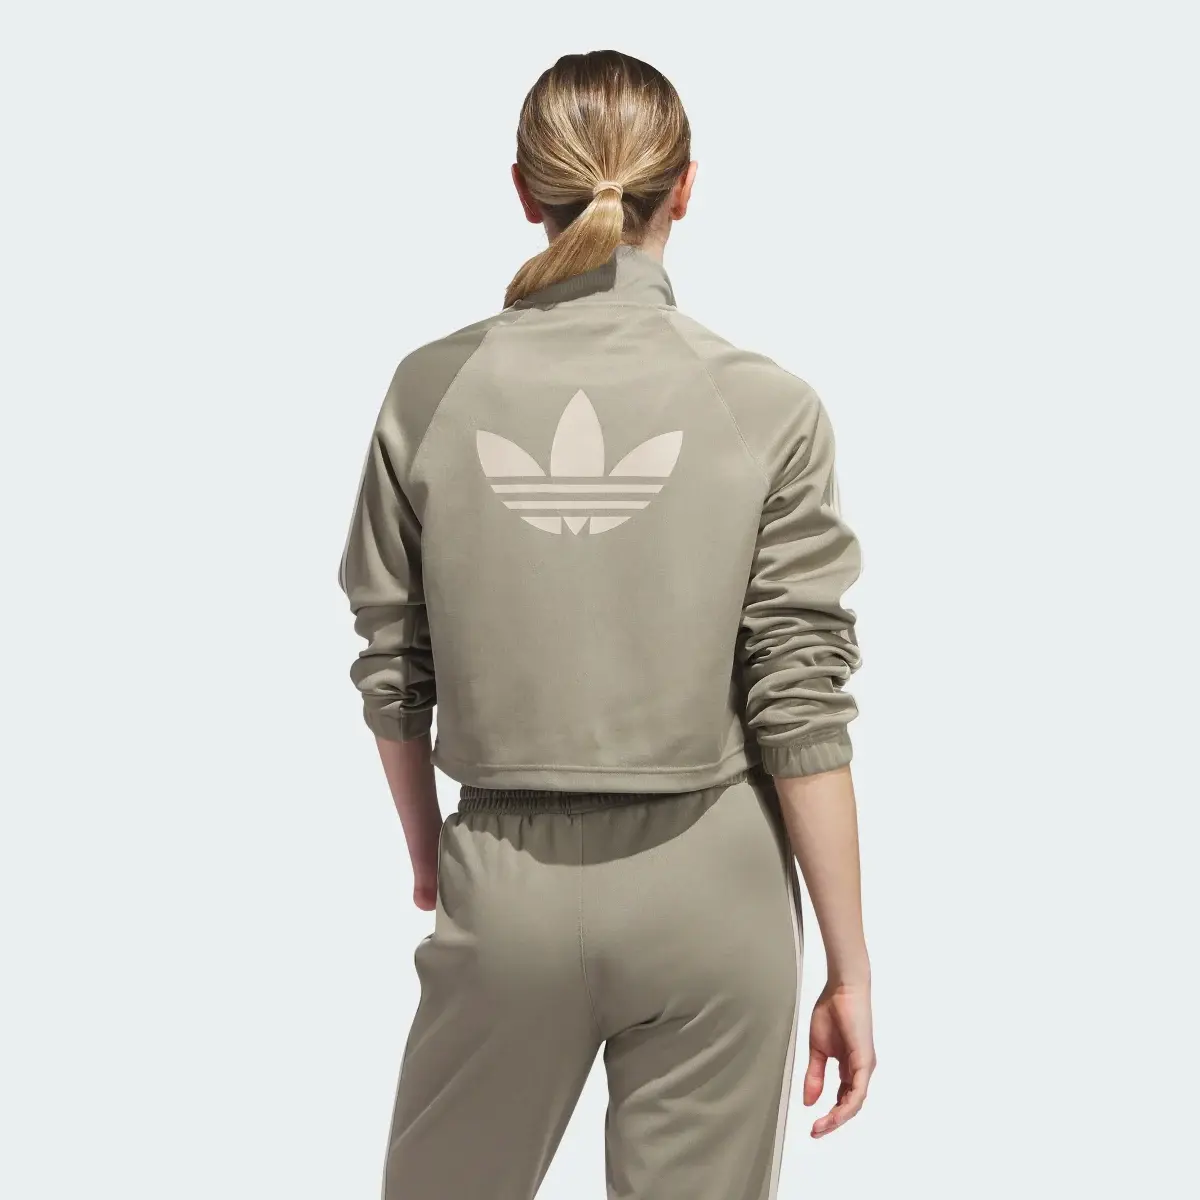 Adidas Tricot Warm-Up Jacket. 3